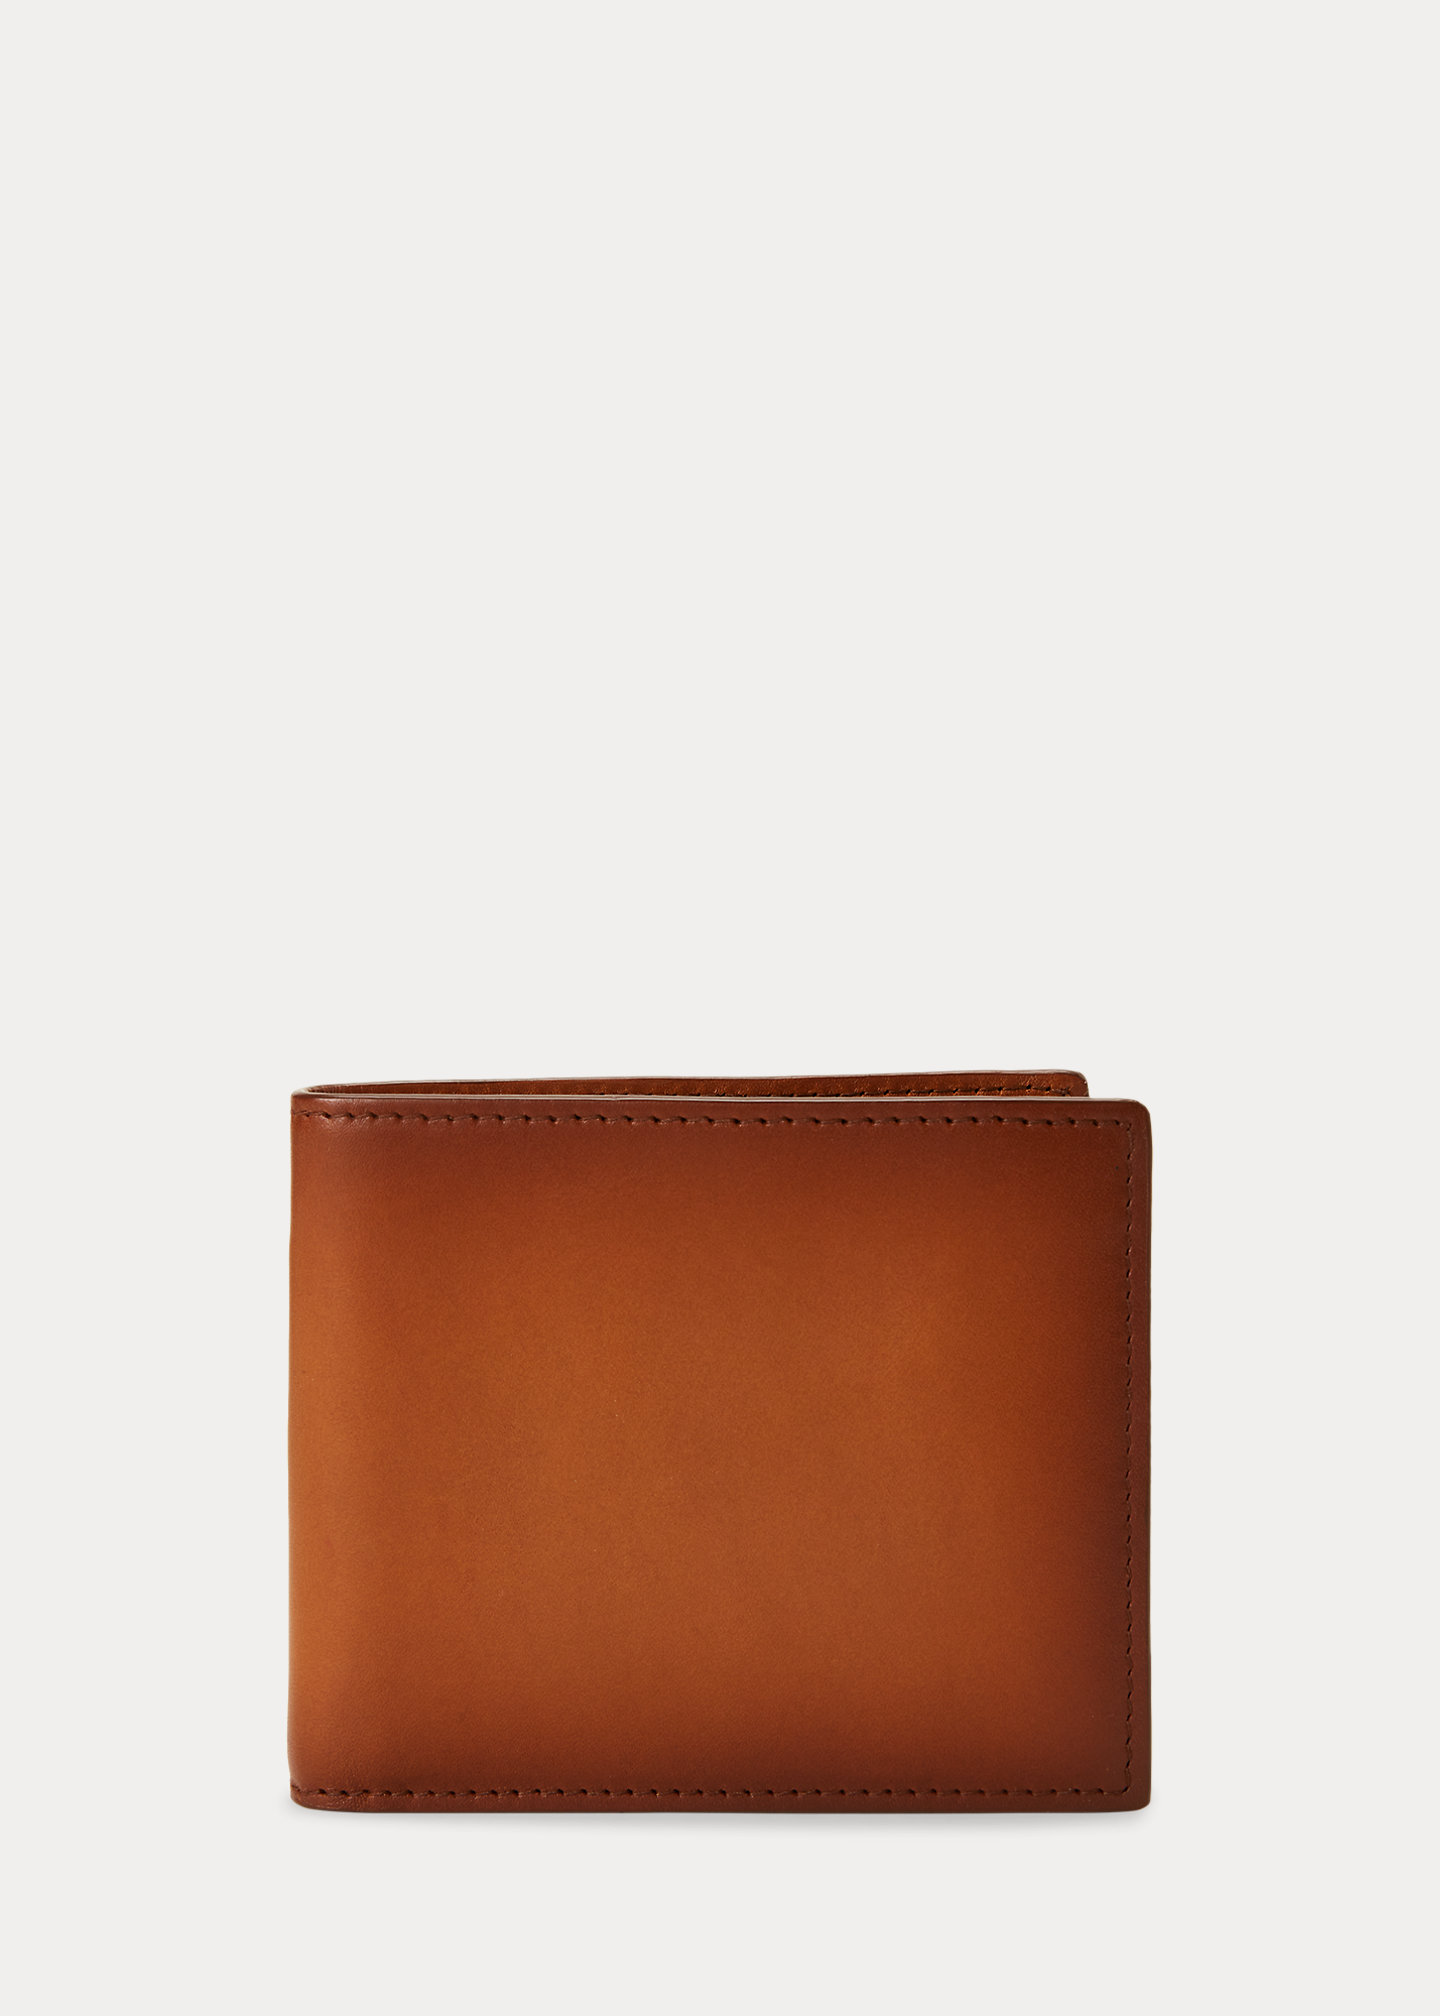 stylish handbags Wallets & Small Leather Goods